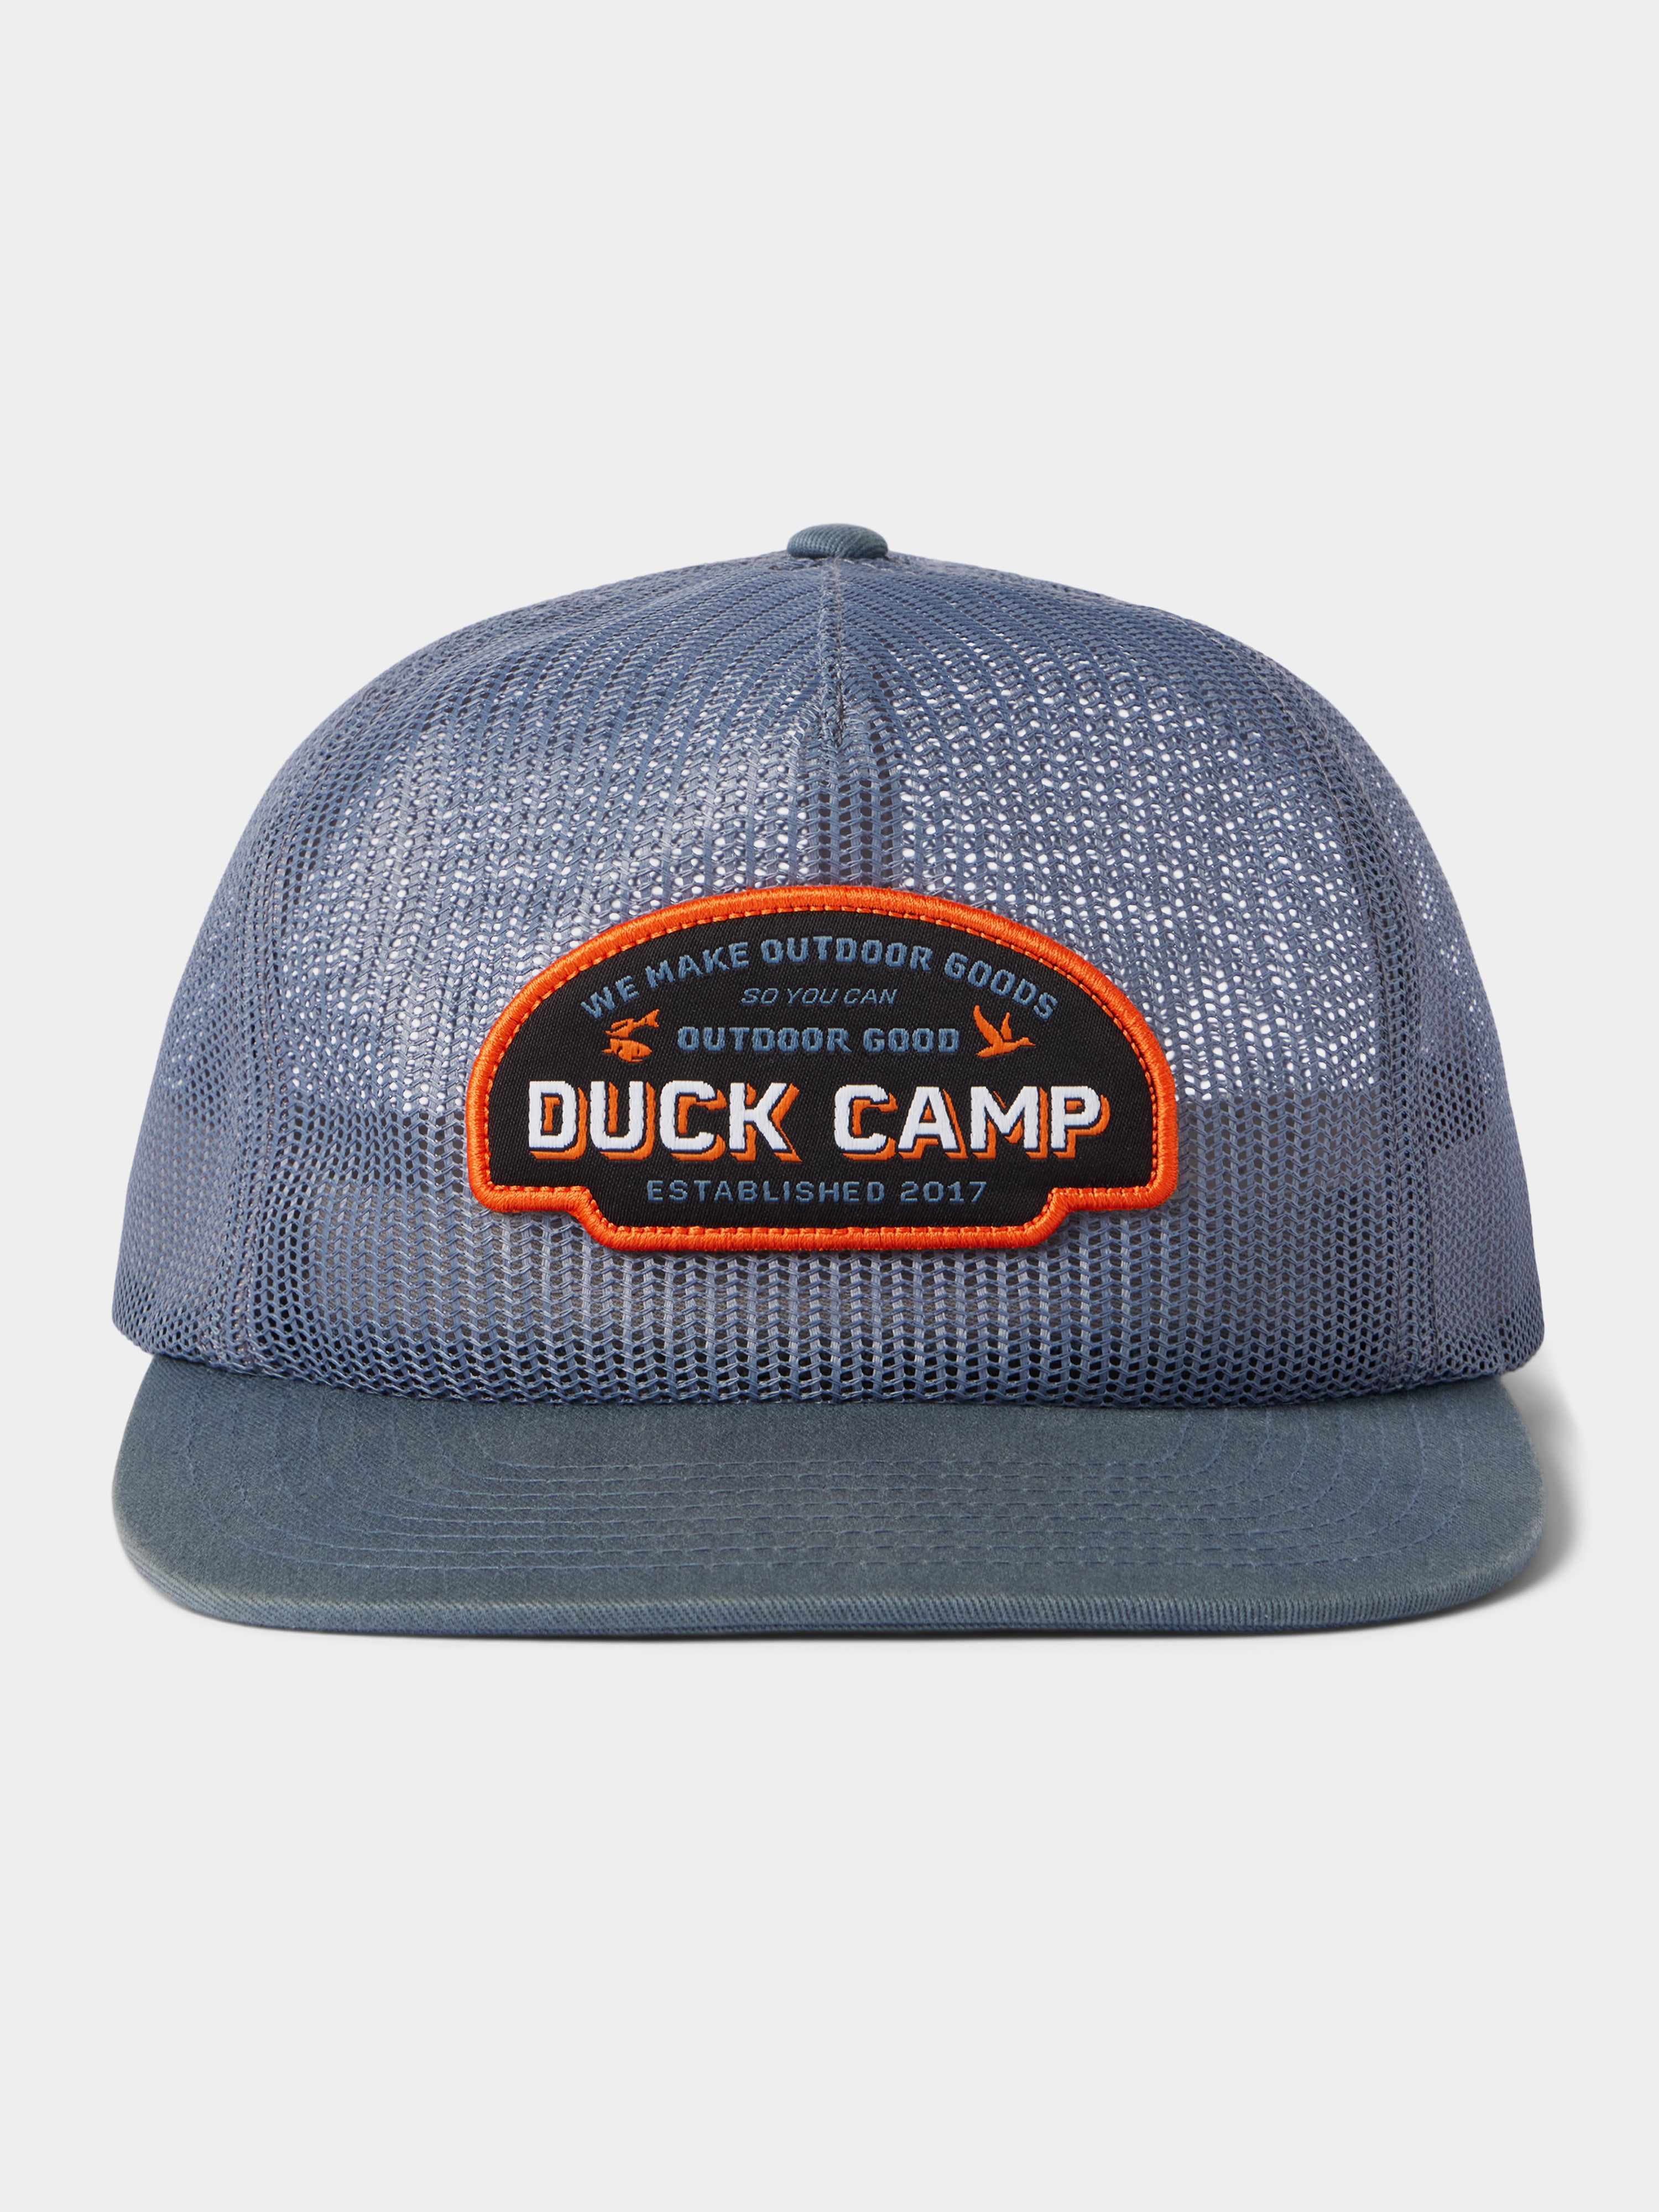 Boyd Duckett Fishing Pro Driven Adjustable Hat Cap Trucker Mesh Auto